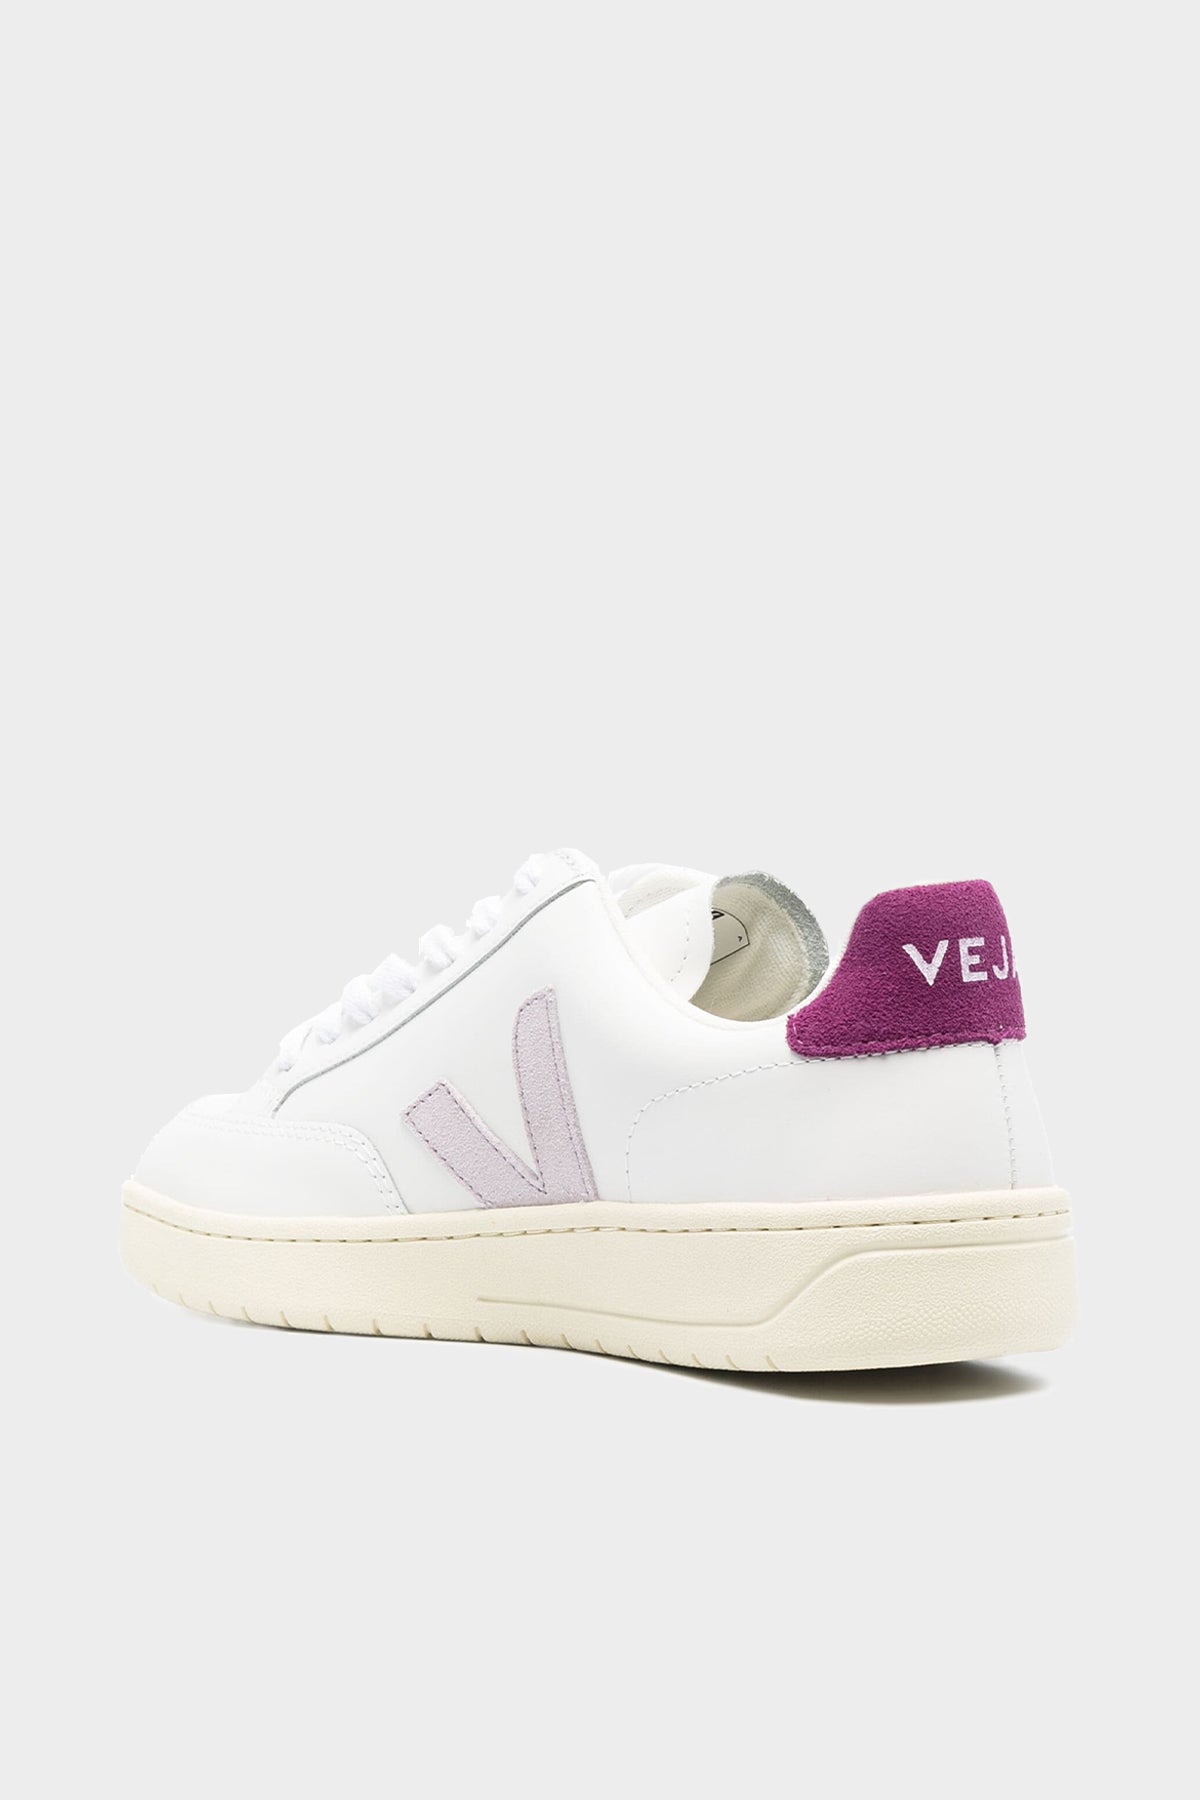 V-12 Leather Sneaker in White Parme Magenta - shop-olivia.com